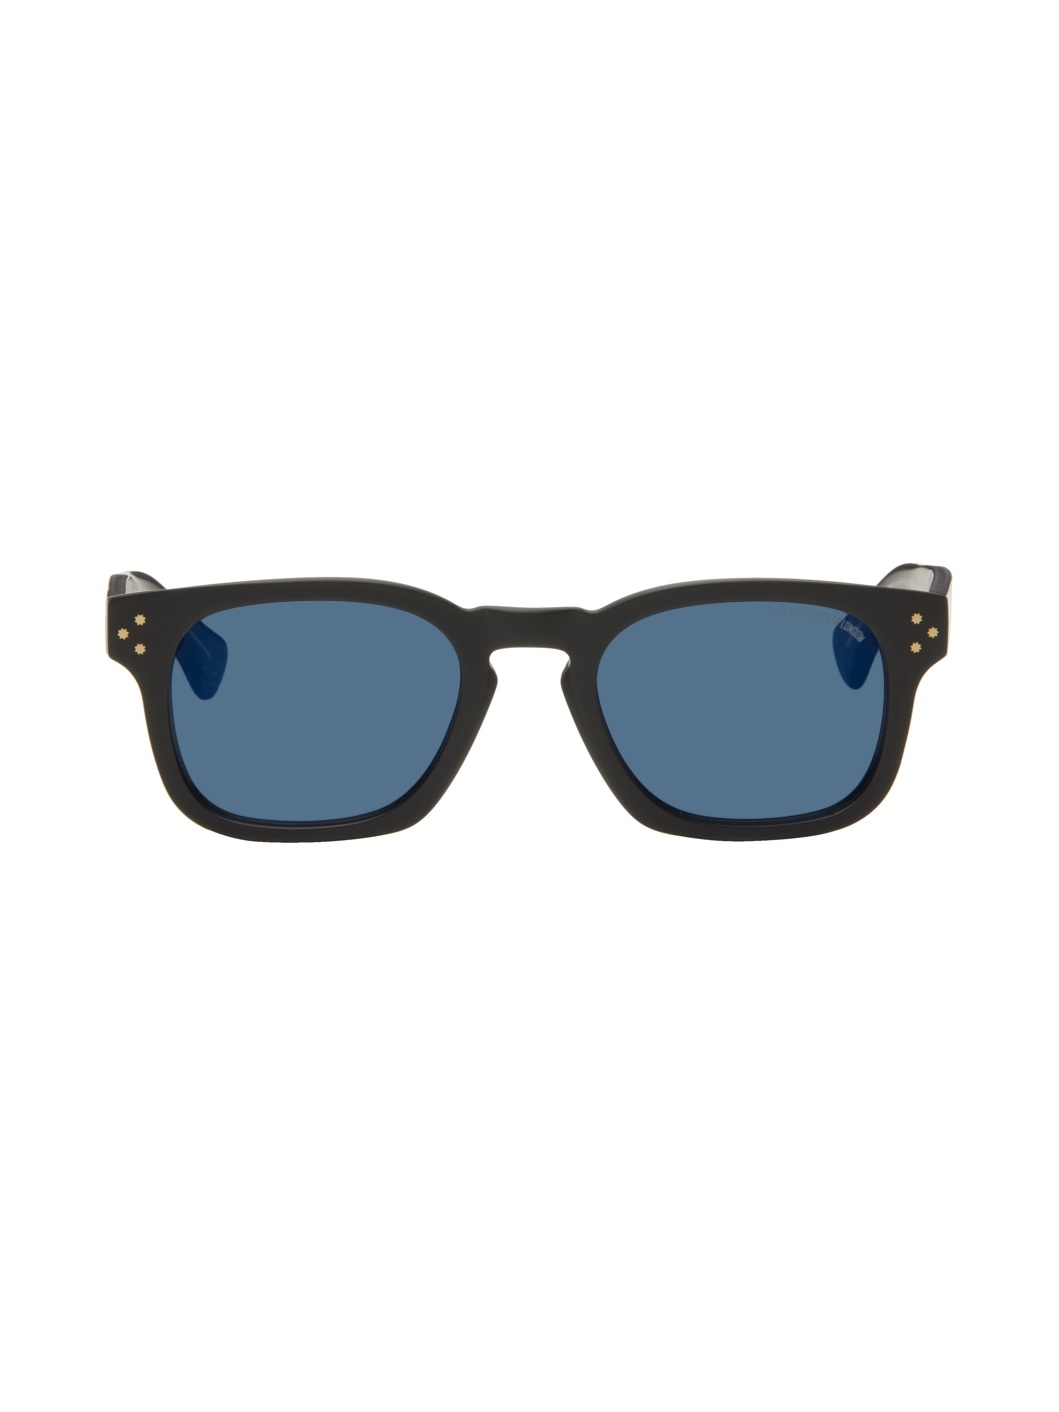 Black 9768 Sunglasses - 1